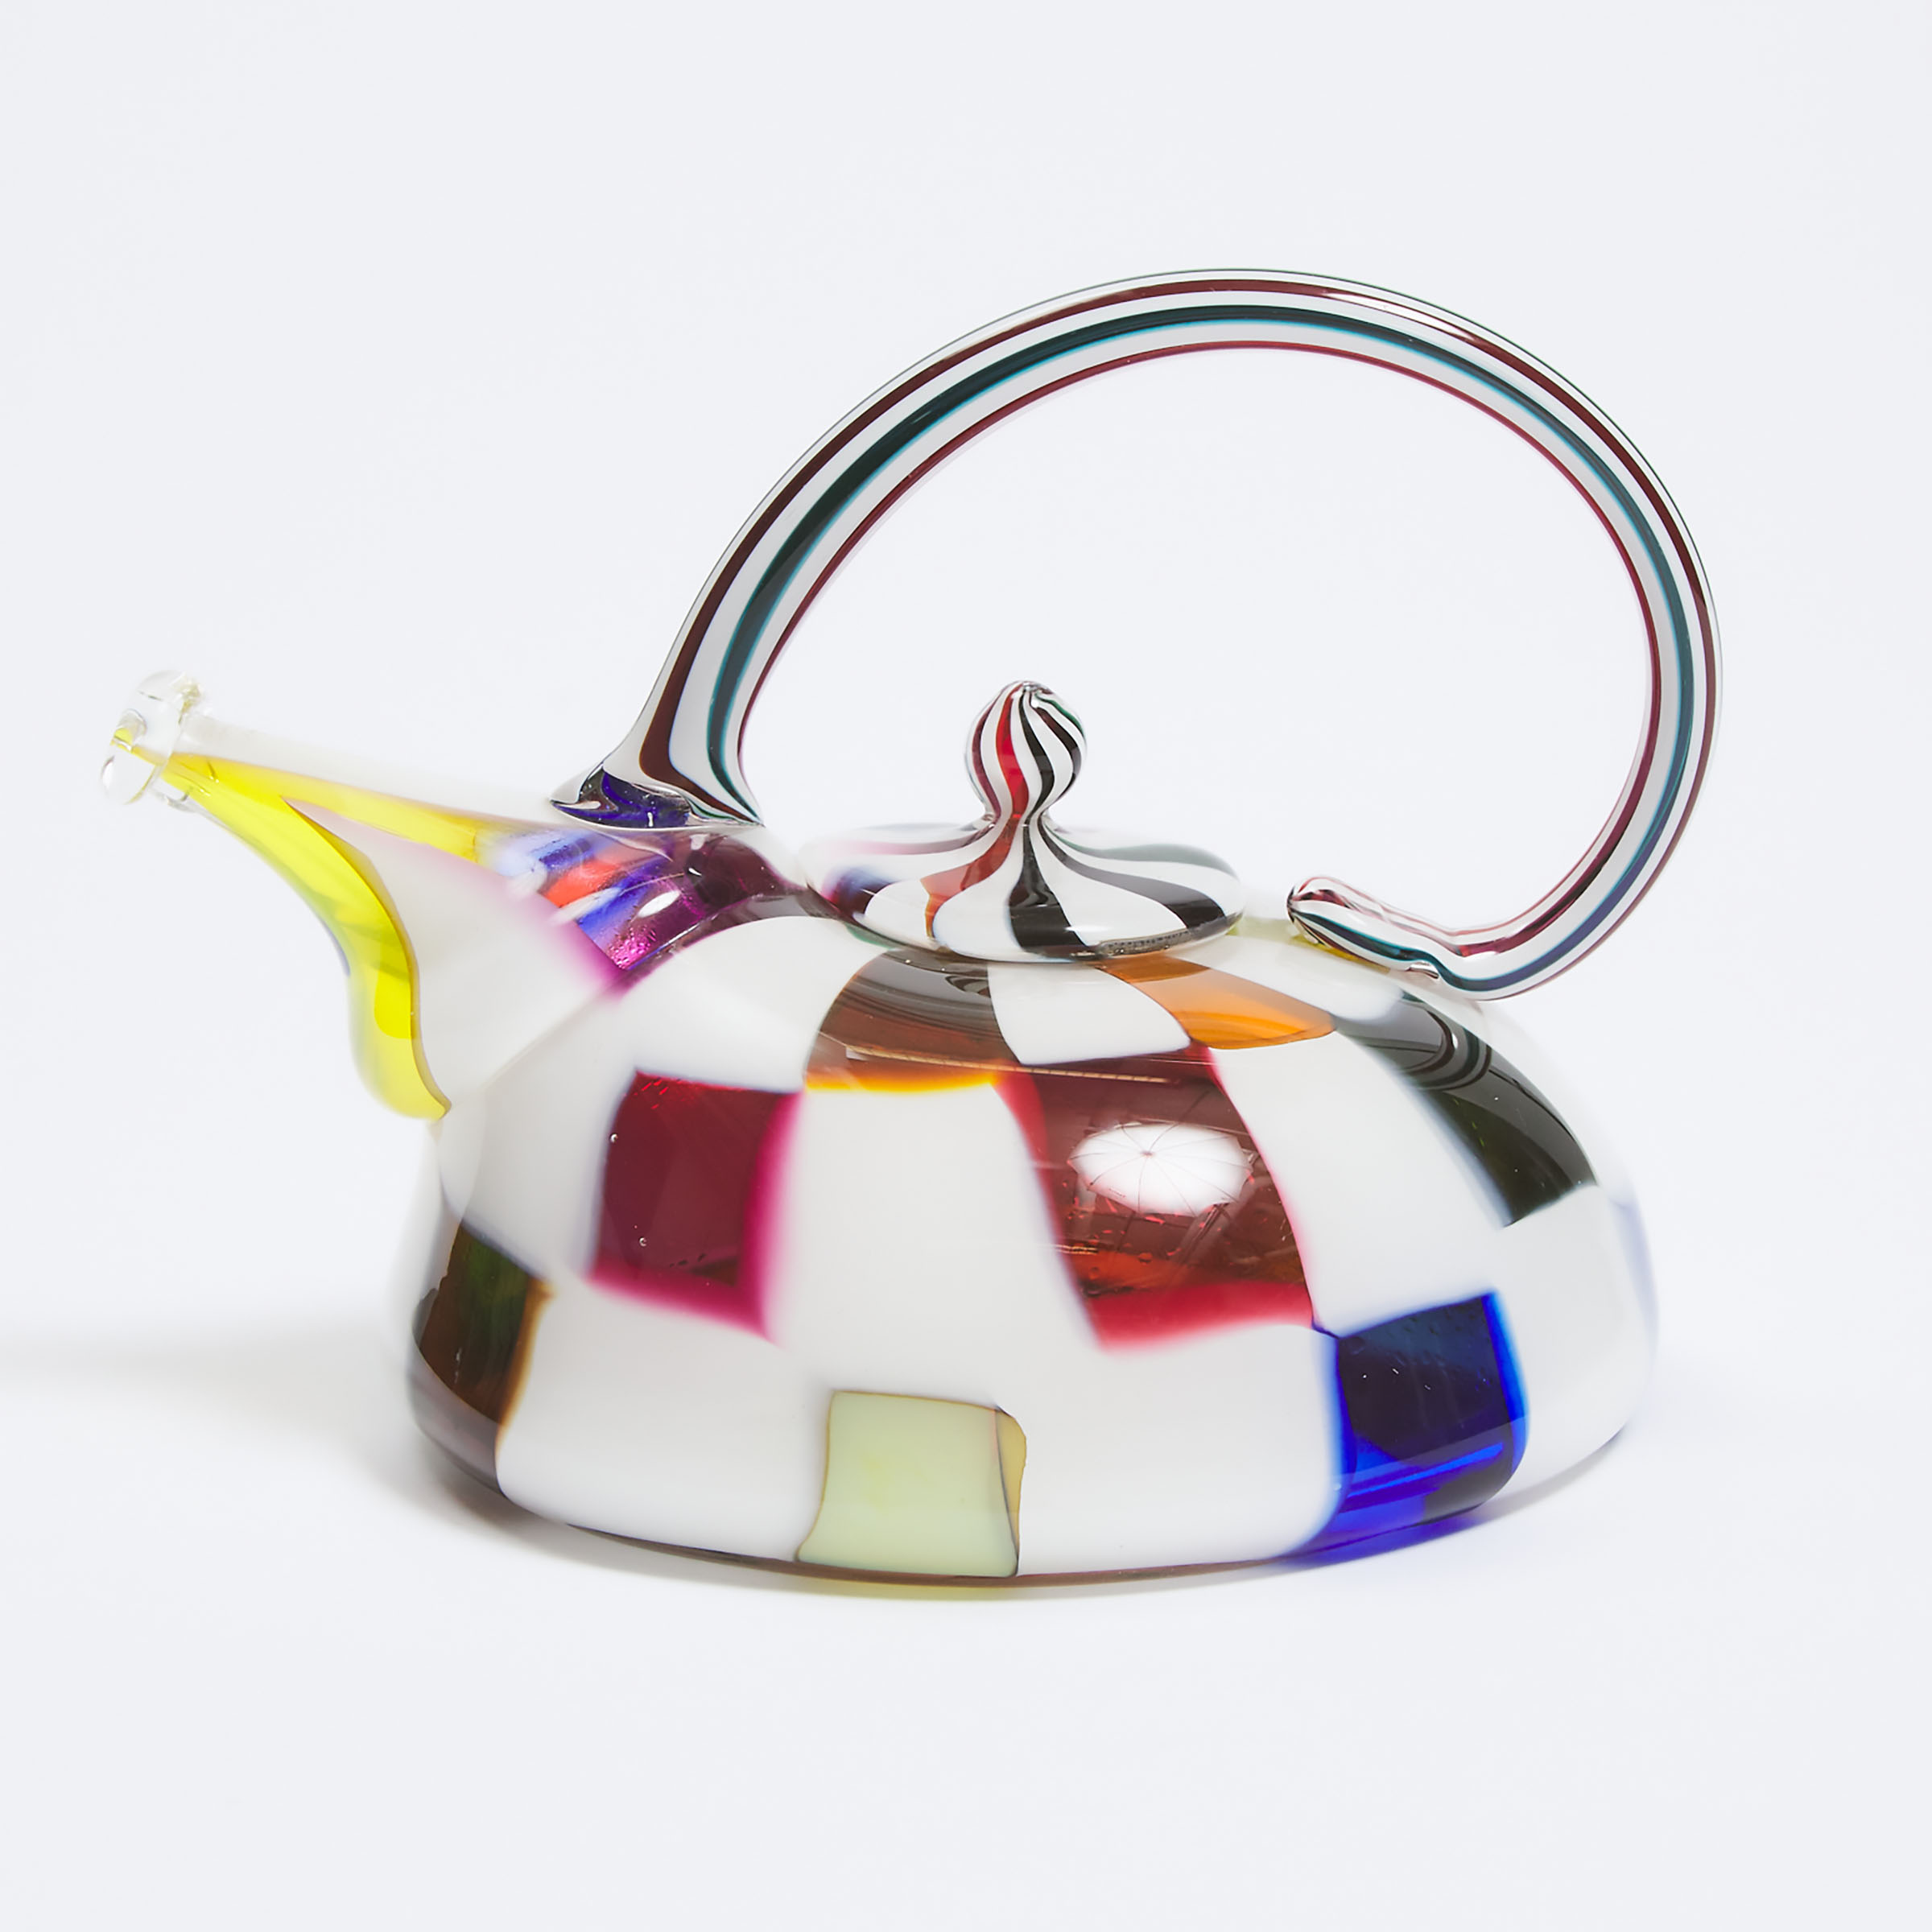 Richard Marquis (American, b.1945), Murrine Glass Teapot Sculpture, 1978